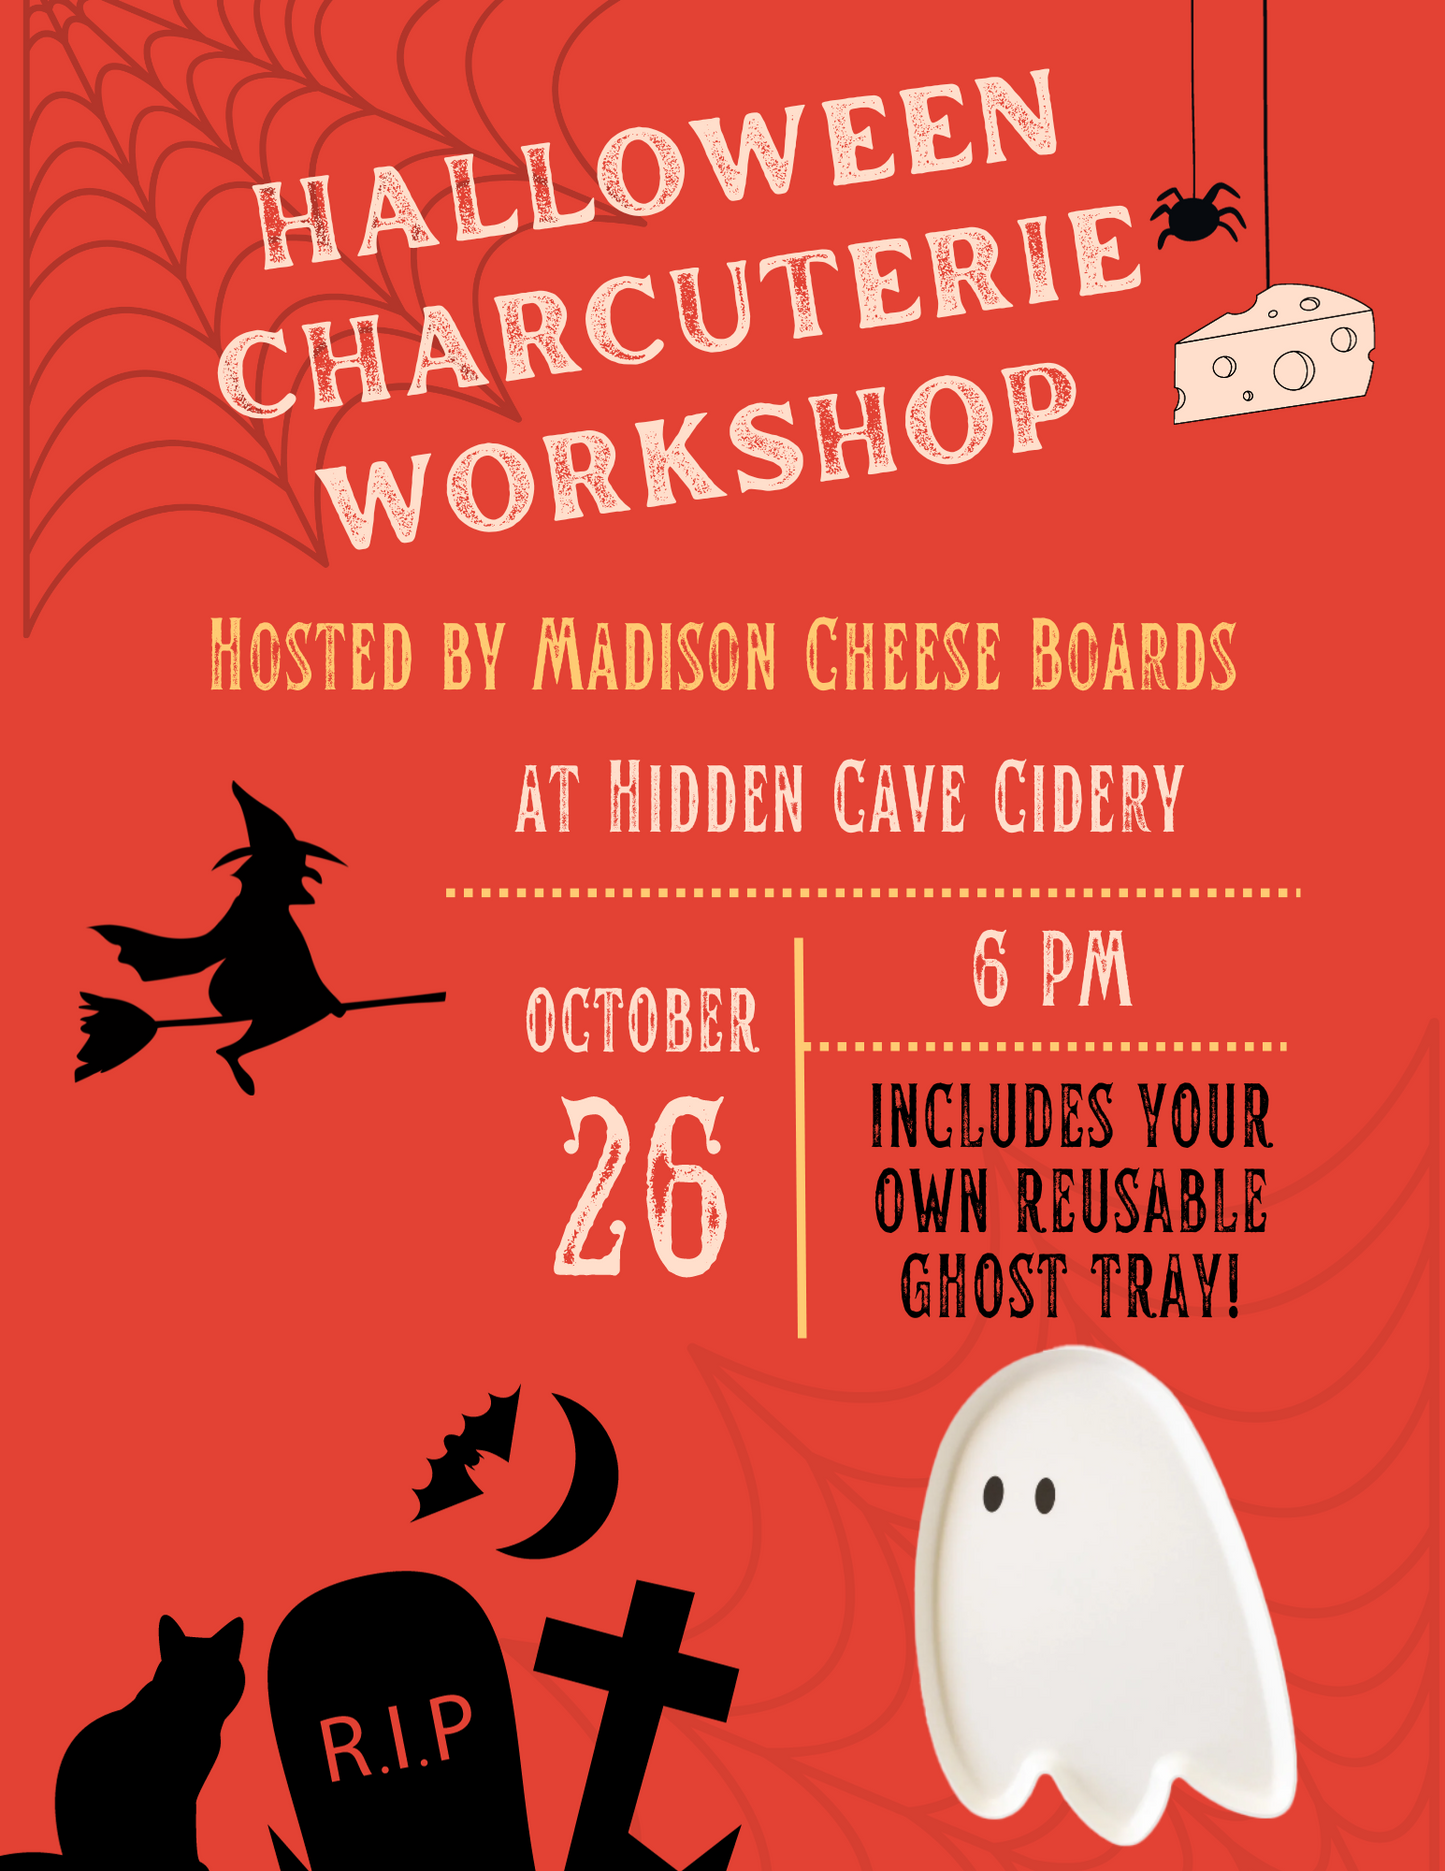 Halloween Charcuterie Workshop: October 26 @ Hidden Cave Cidery 6pm